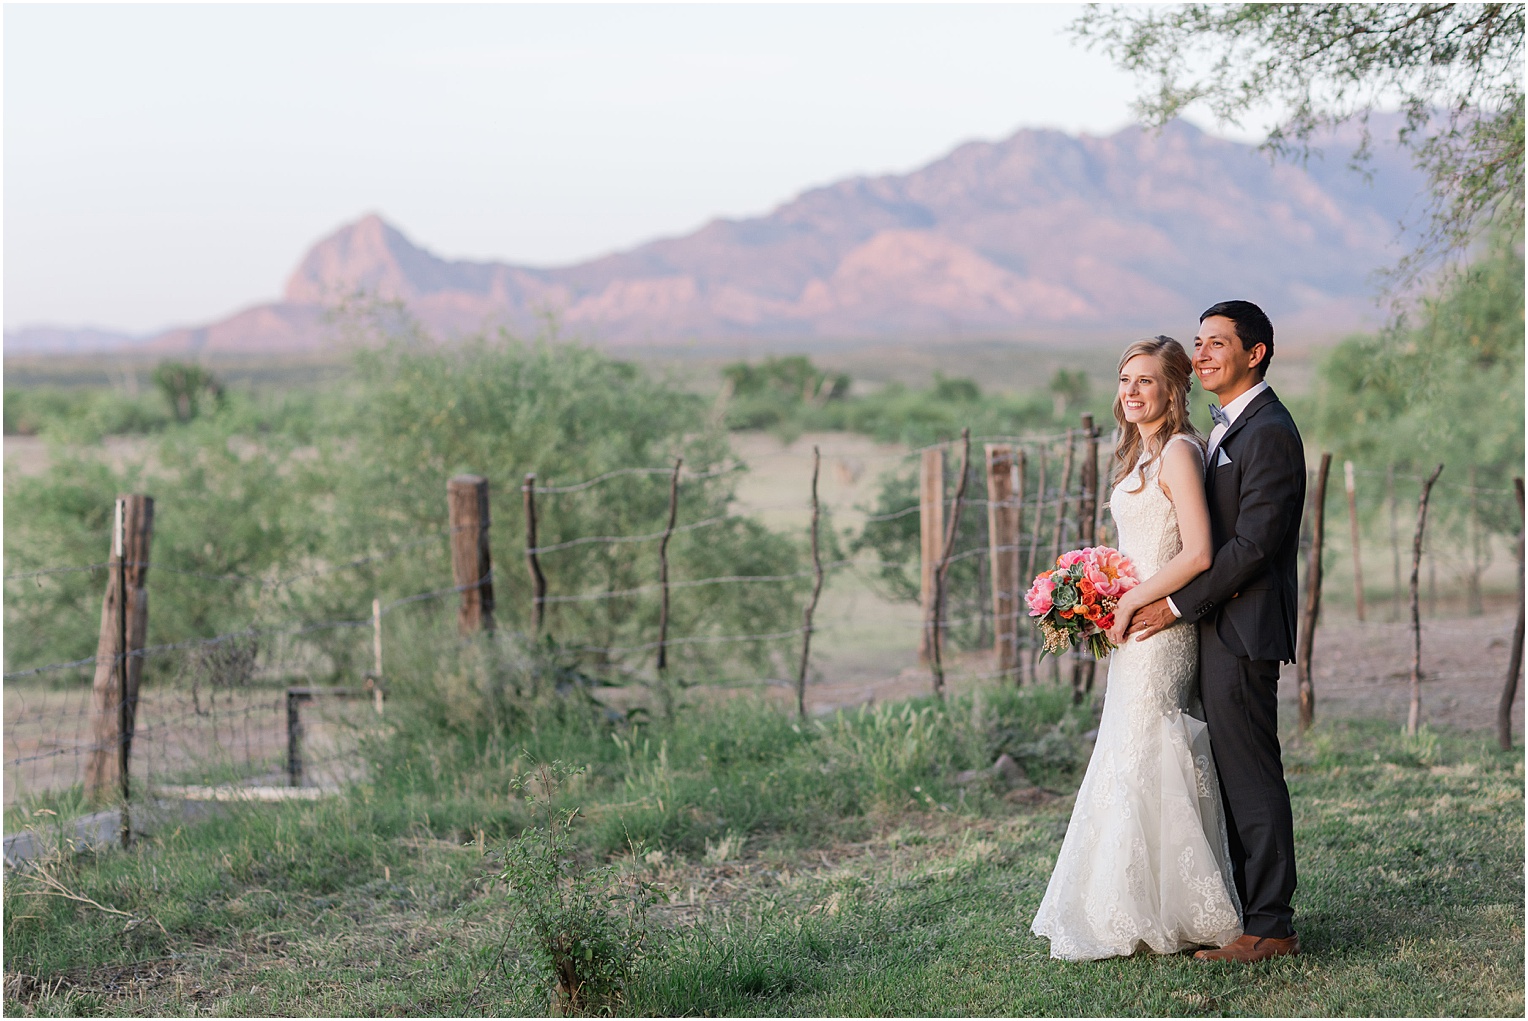 Agua Linda Farm Wedding Tucson AZ Megan & Jorge sunset bride and groom portraits